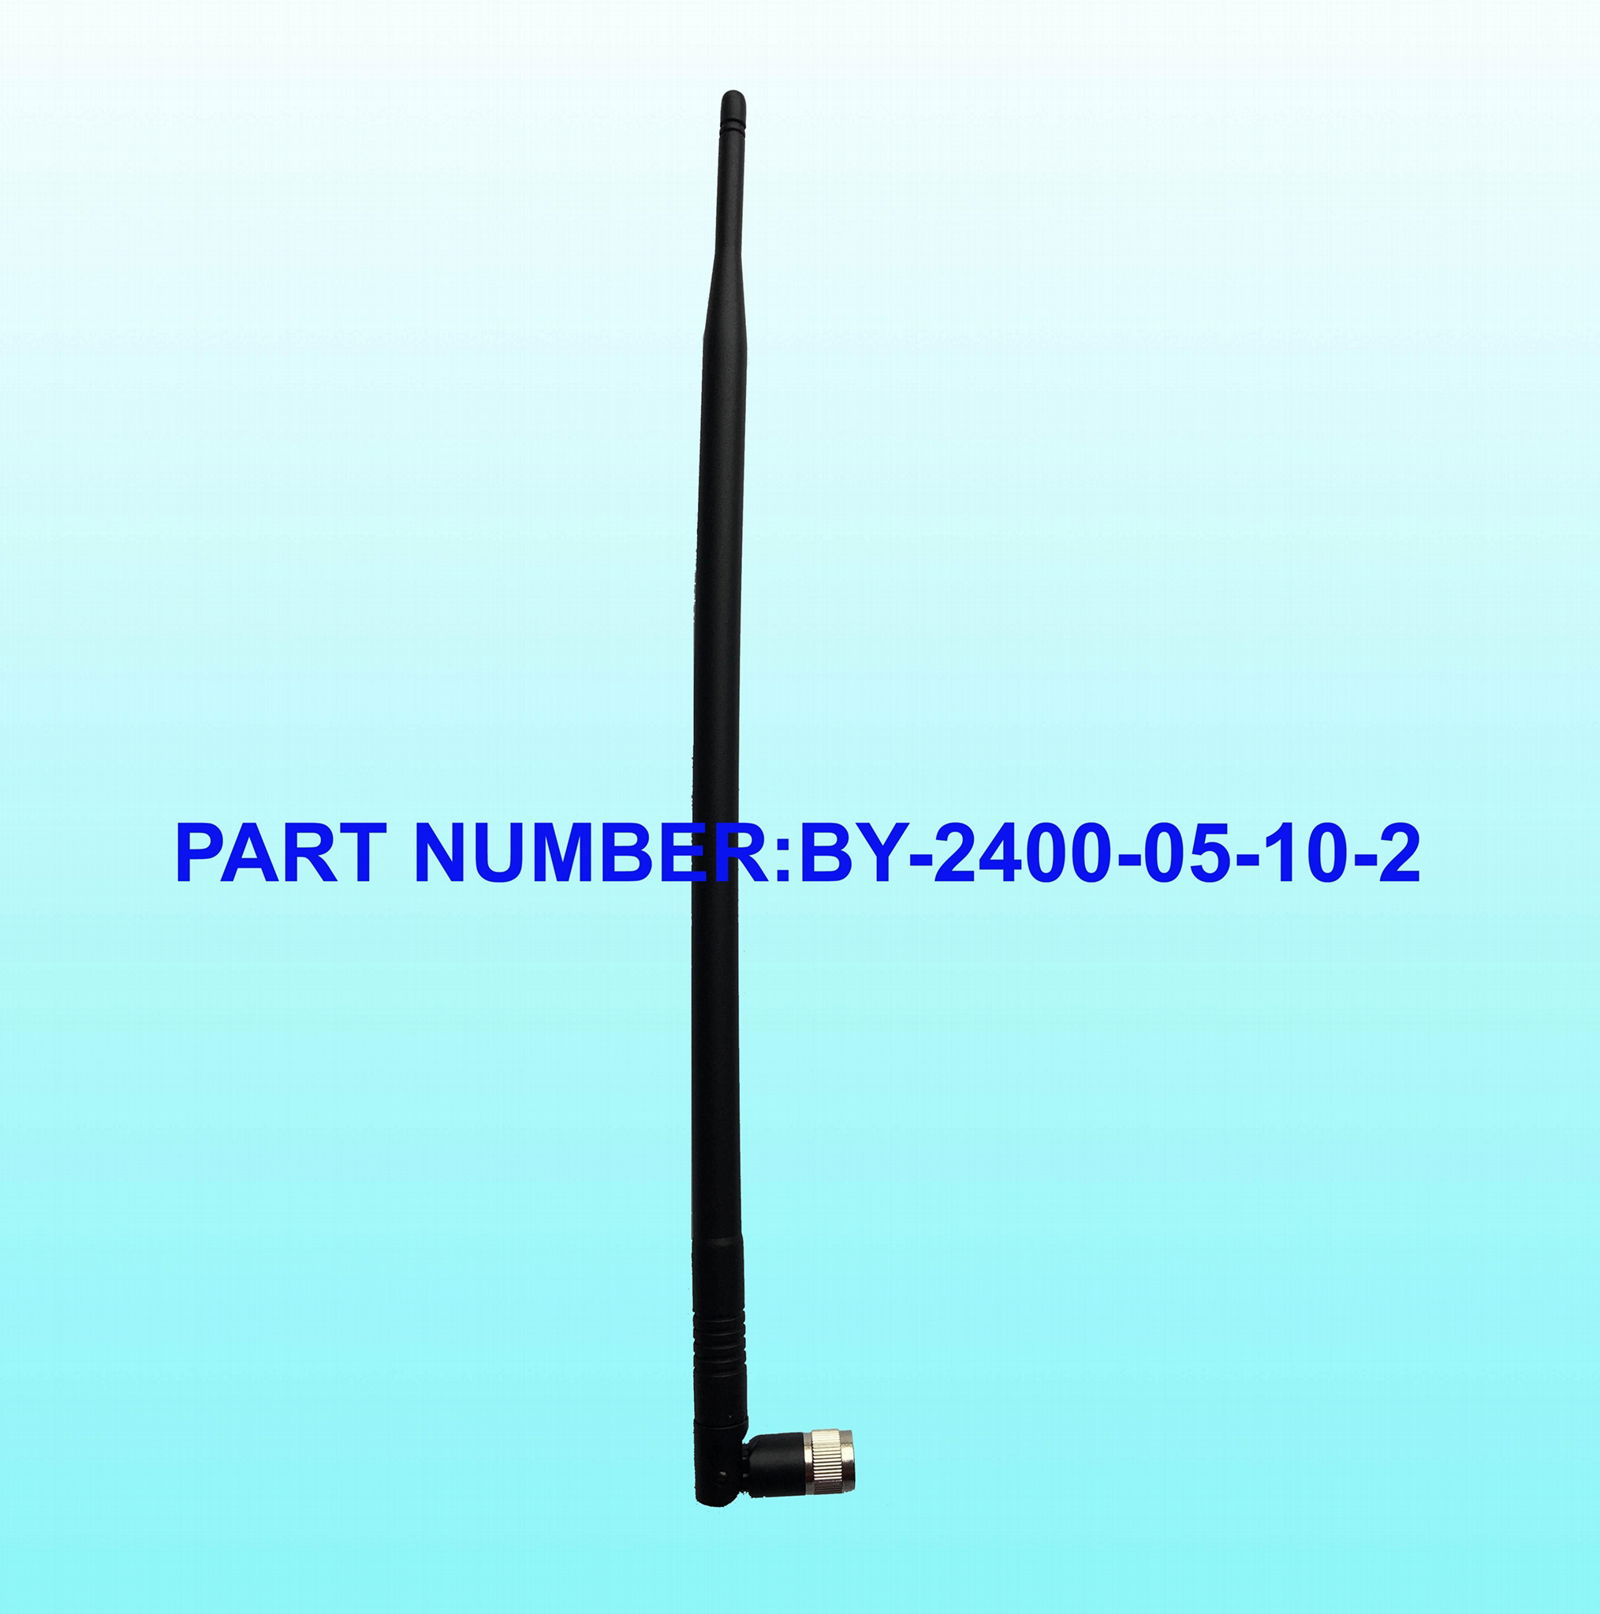 Wifi(2.4G) rubber Antenna